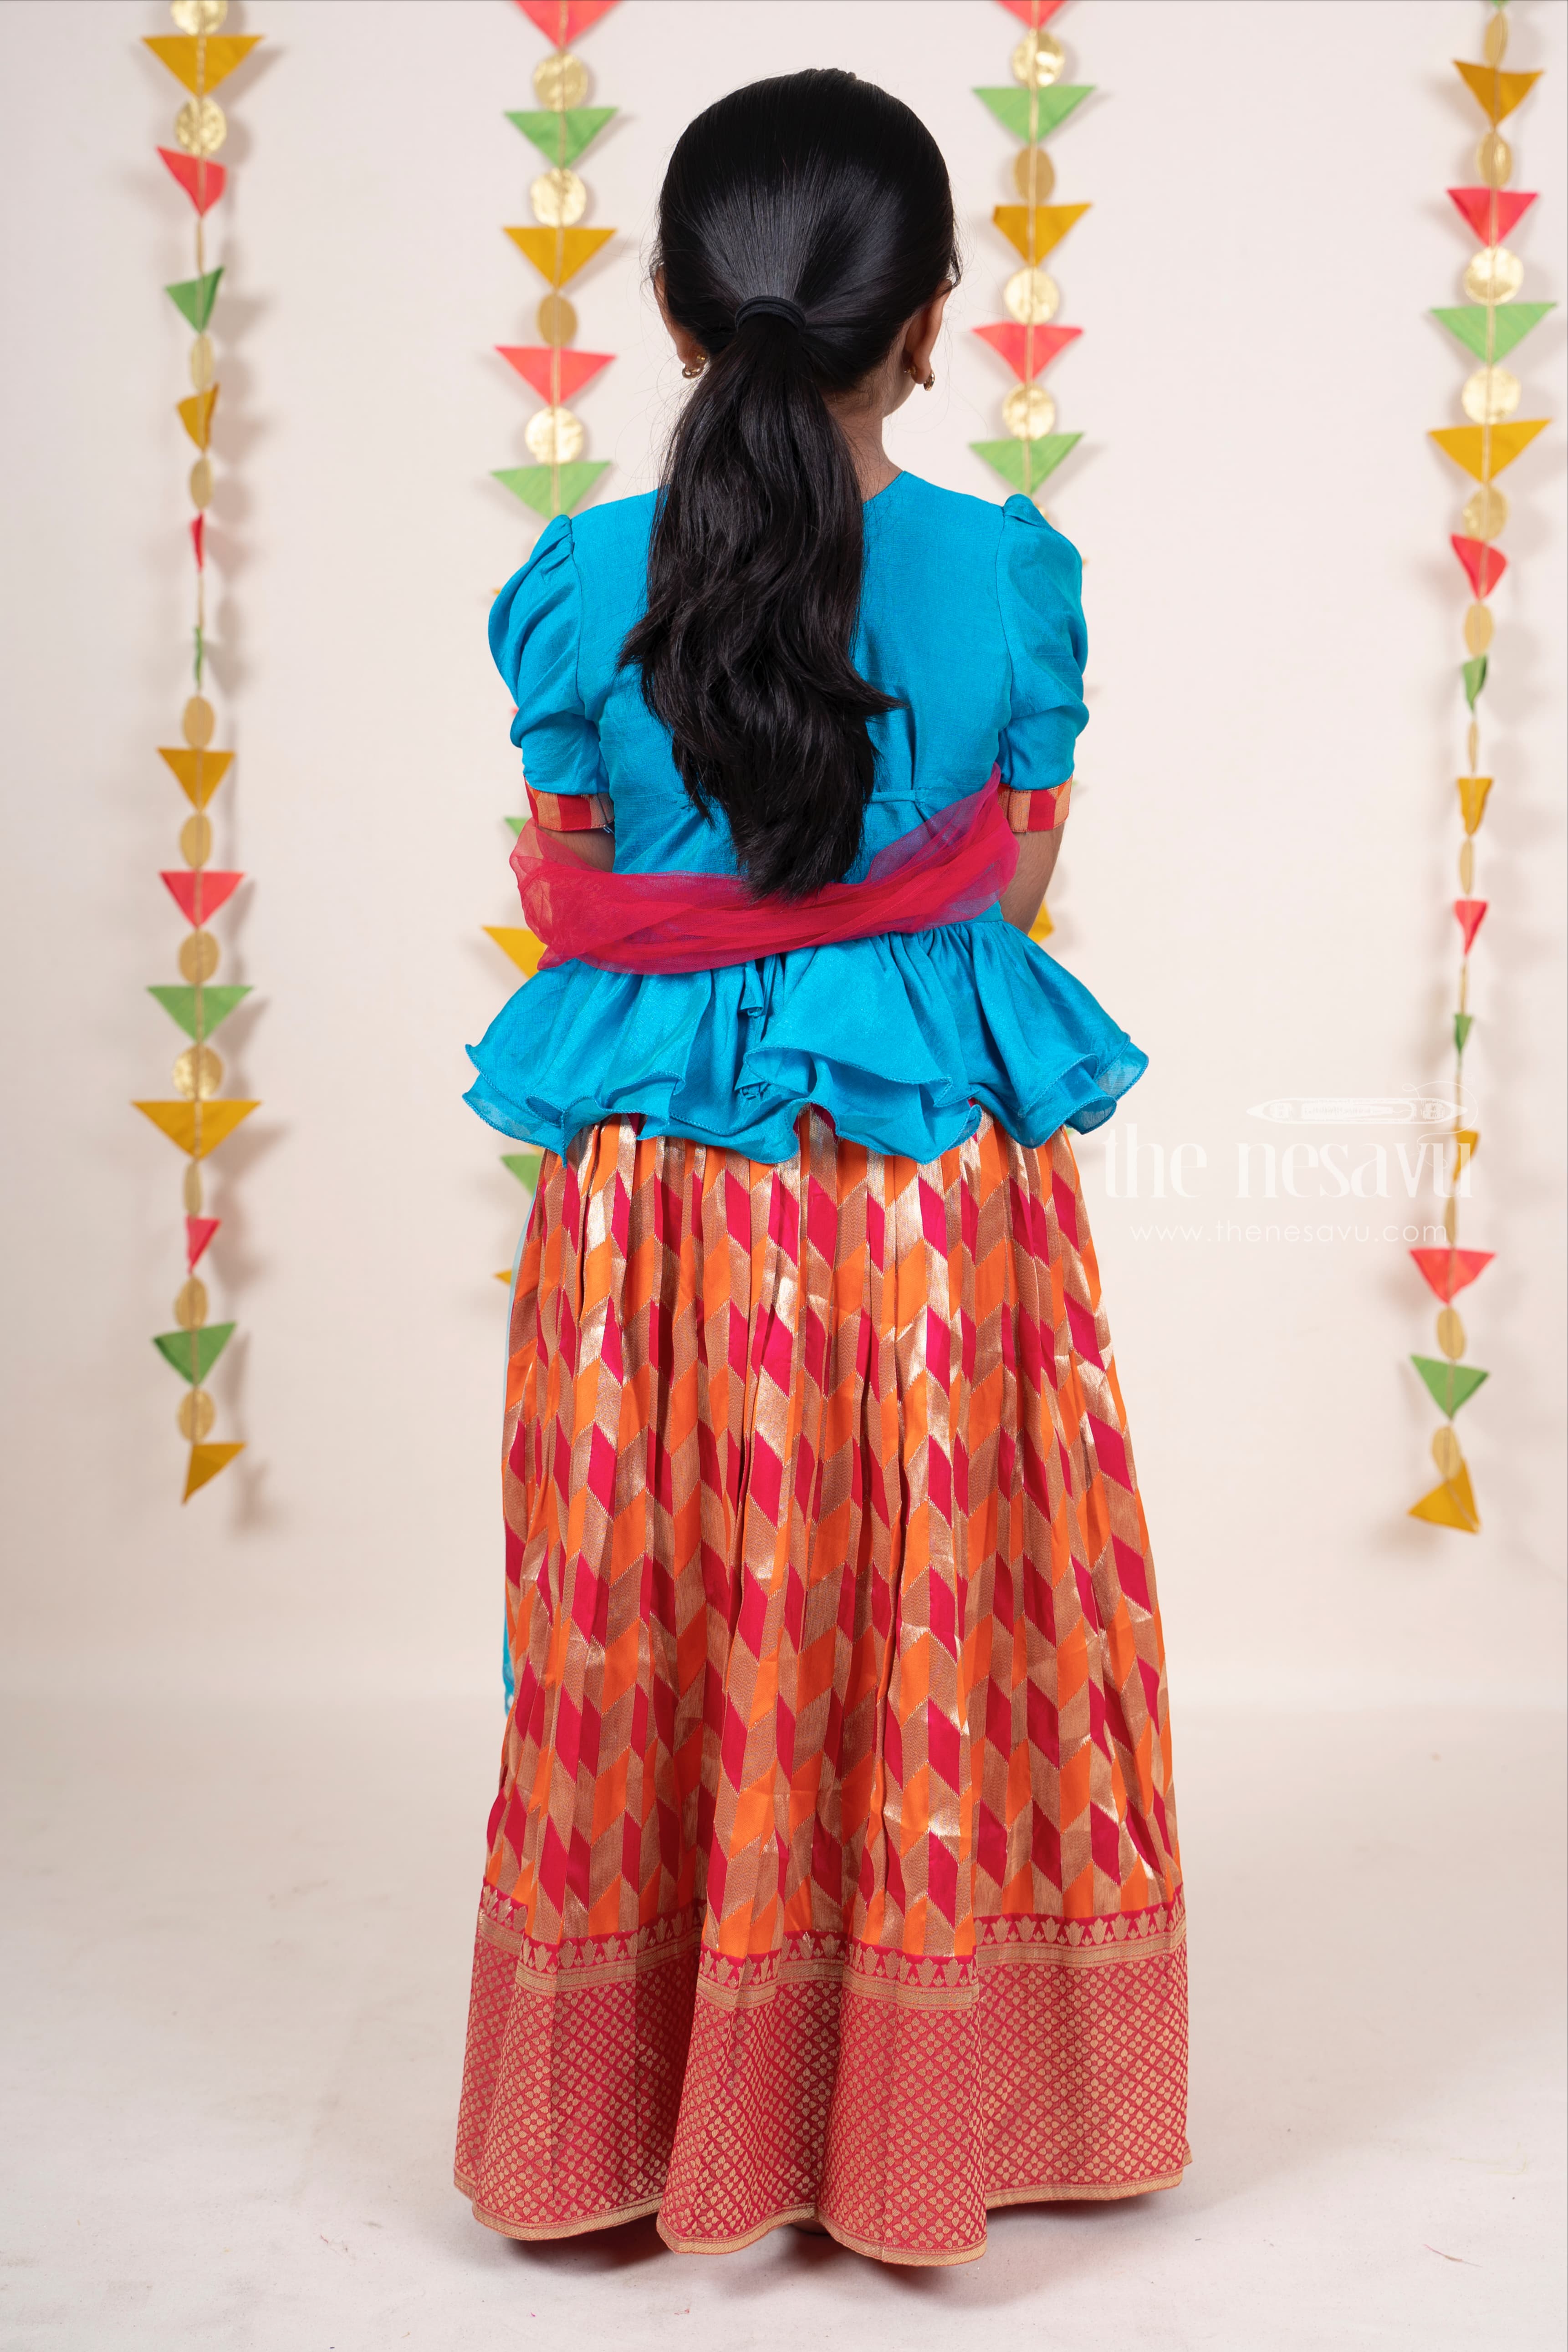 Embellished Kameez with Banarsi Lehenga Dress for Bridal Wear – Nameera by  Farooq